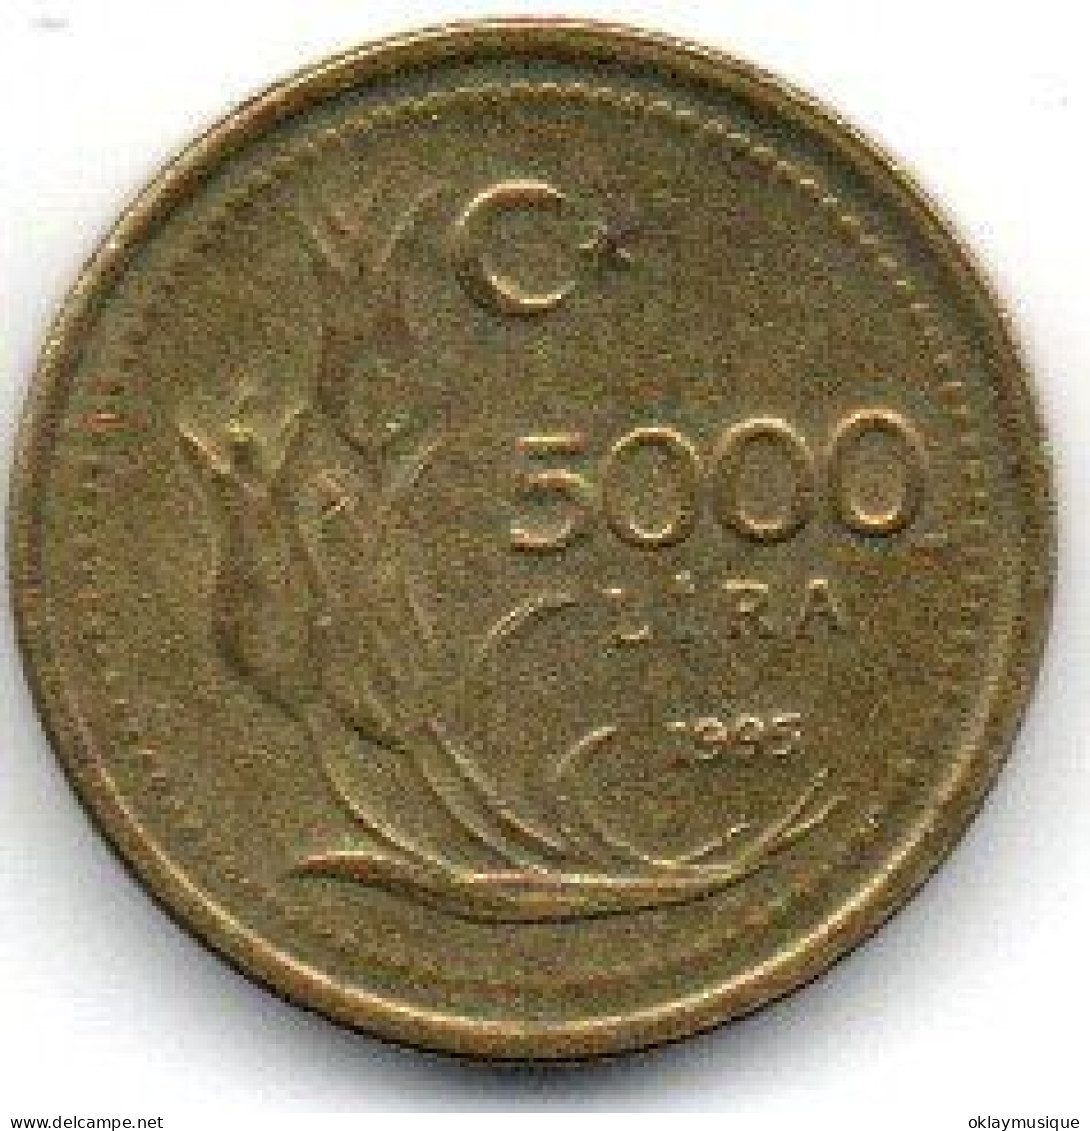 5000 Lira 1995 - Turkey